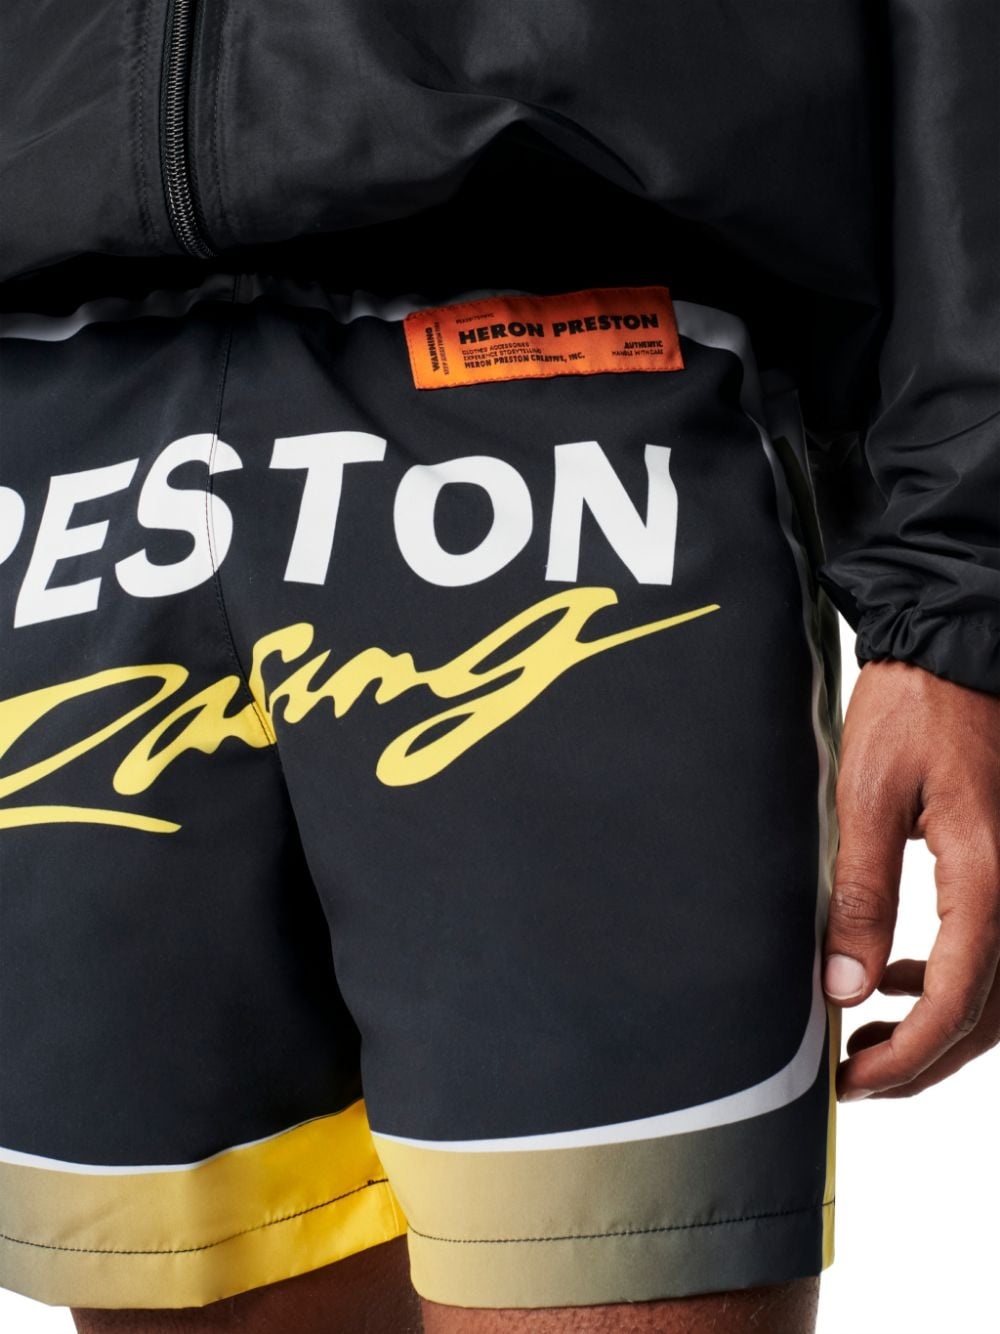 Preston Racing Dry Fit Shorts - 5